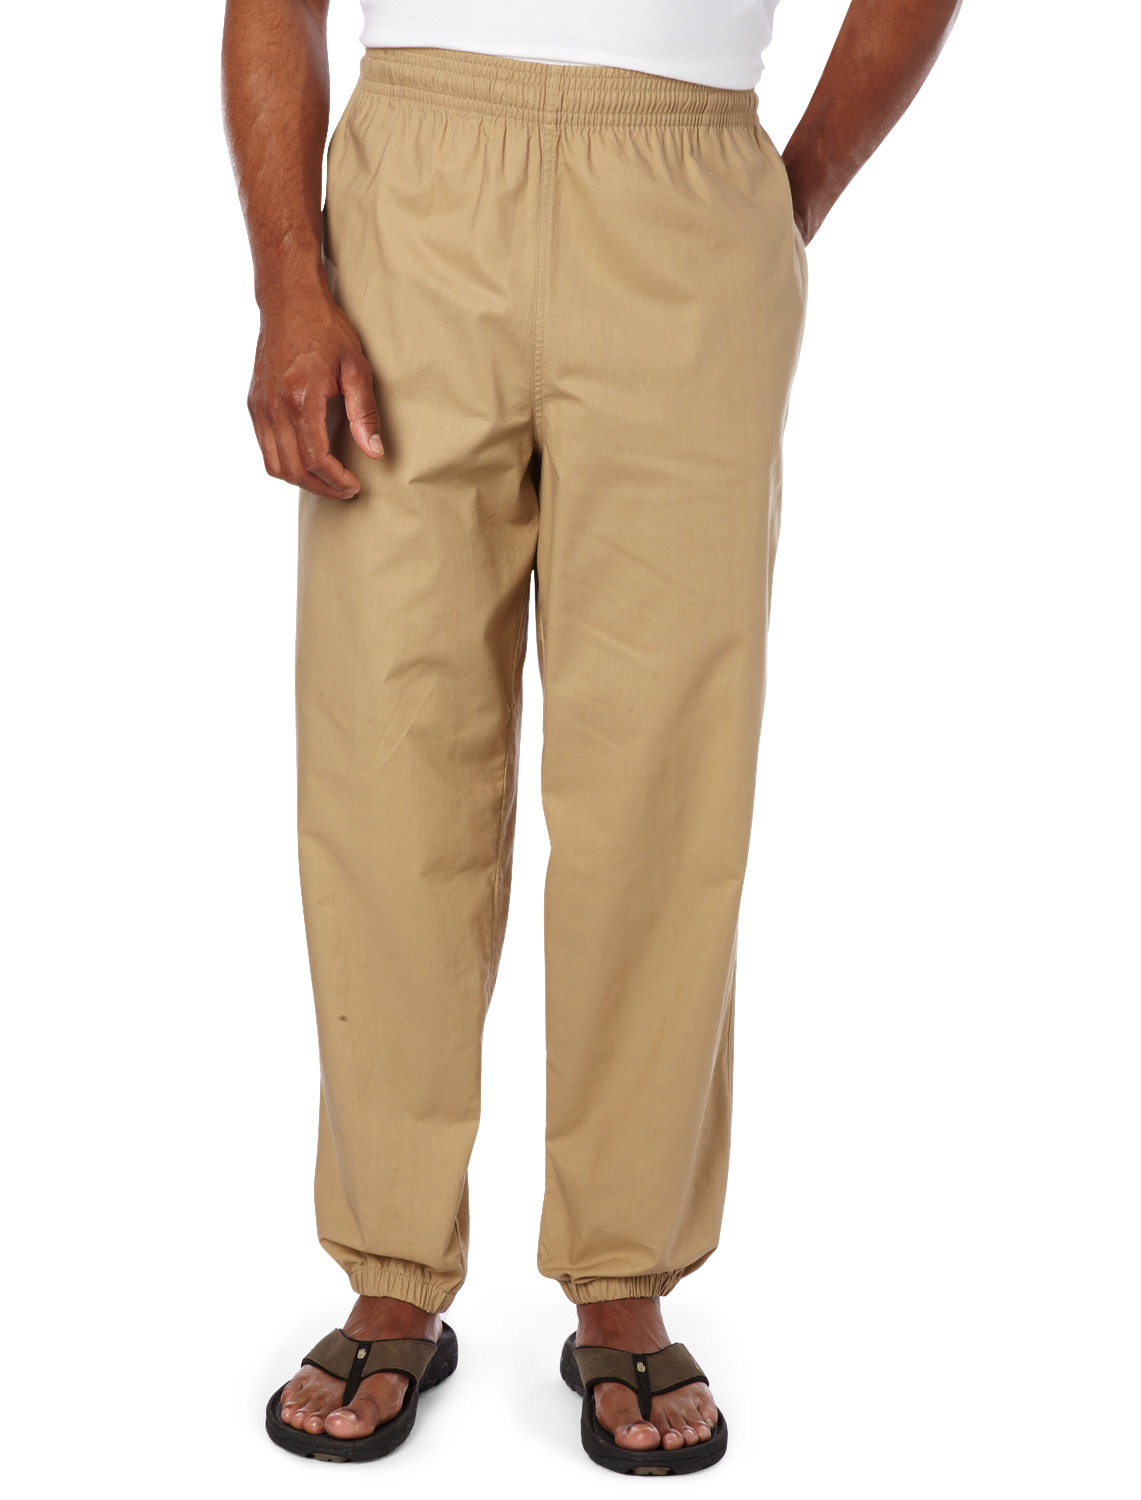 Canyon Ridge Sheeting Beach Pants Casual Male XL Big & Tall | eBay